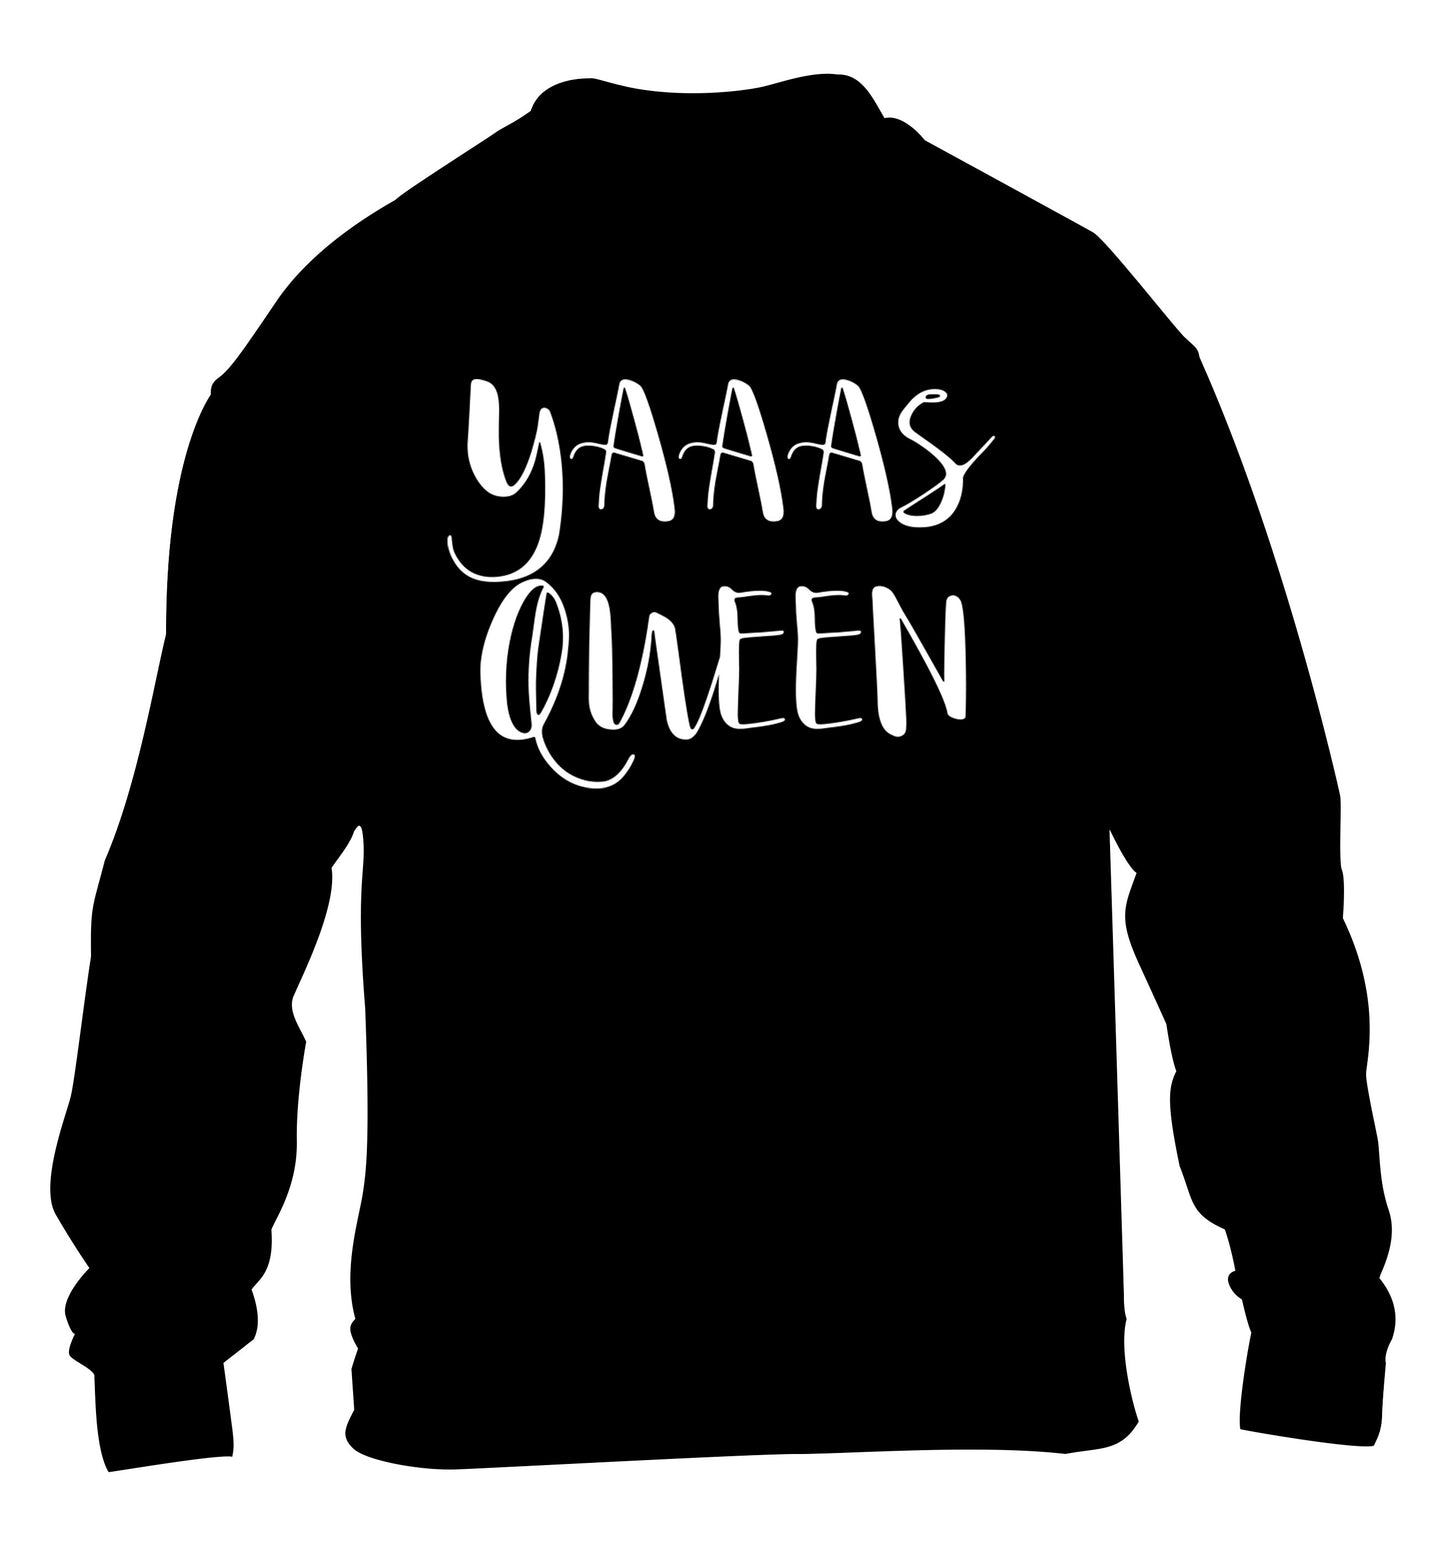 Yas Queen children's black sweater 12-14 Years